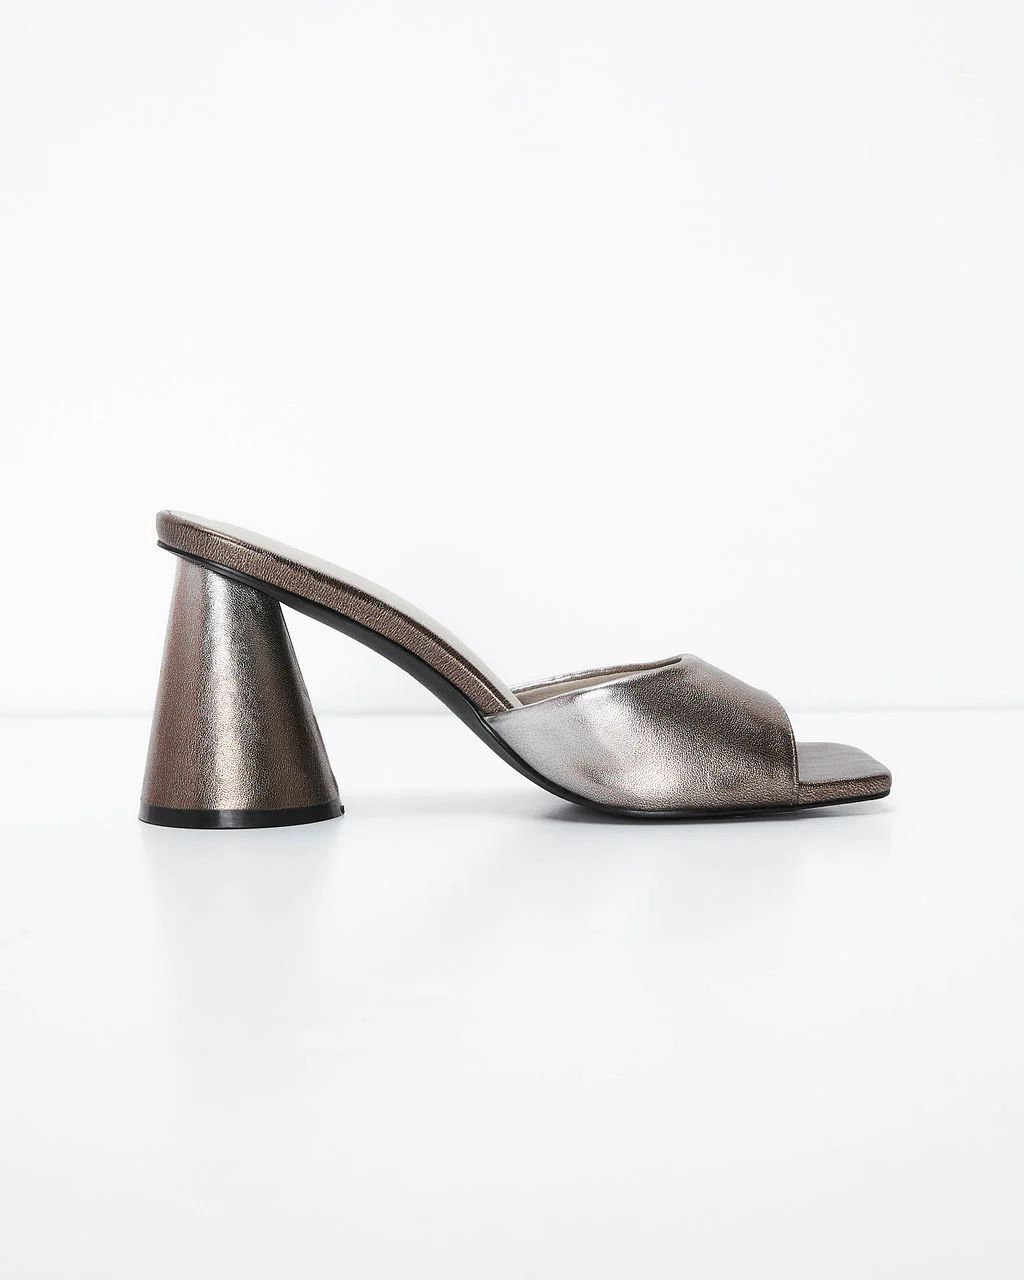 Wanda Open Toe Heels | VICI Collection